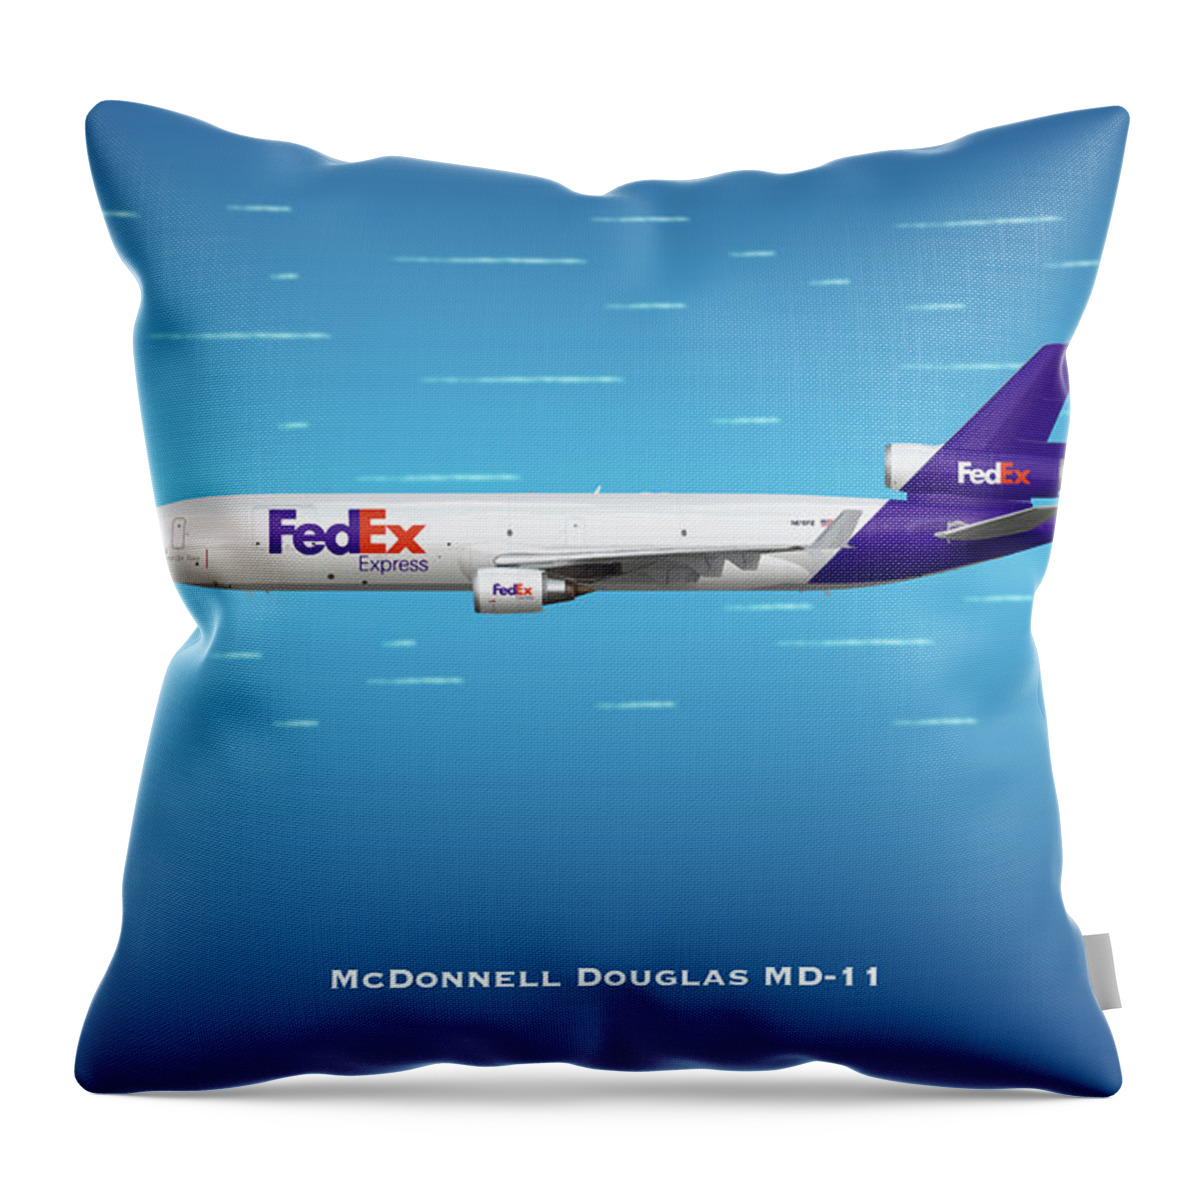 Fedex Throw Pillow featuring the digital art FedEx McDonnell Douglas MD-11 by Airpower Art